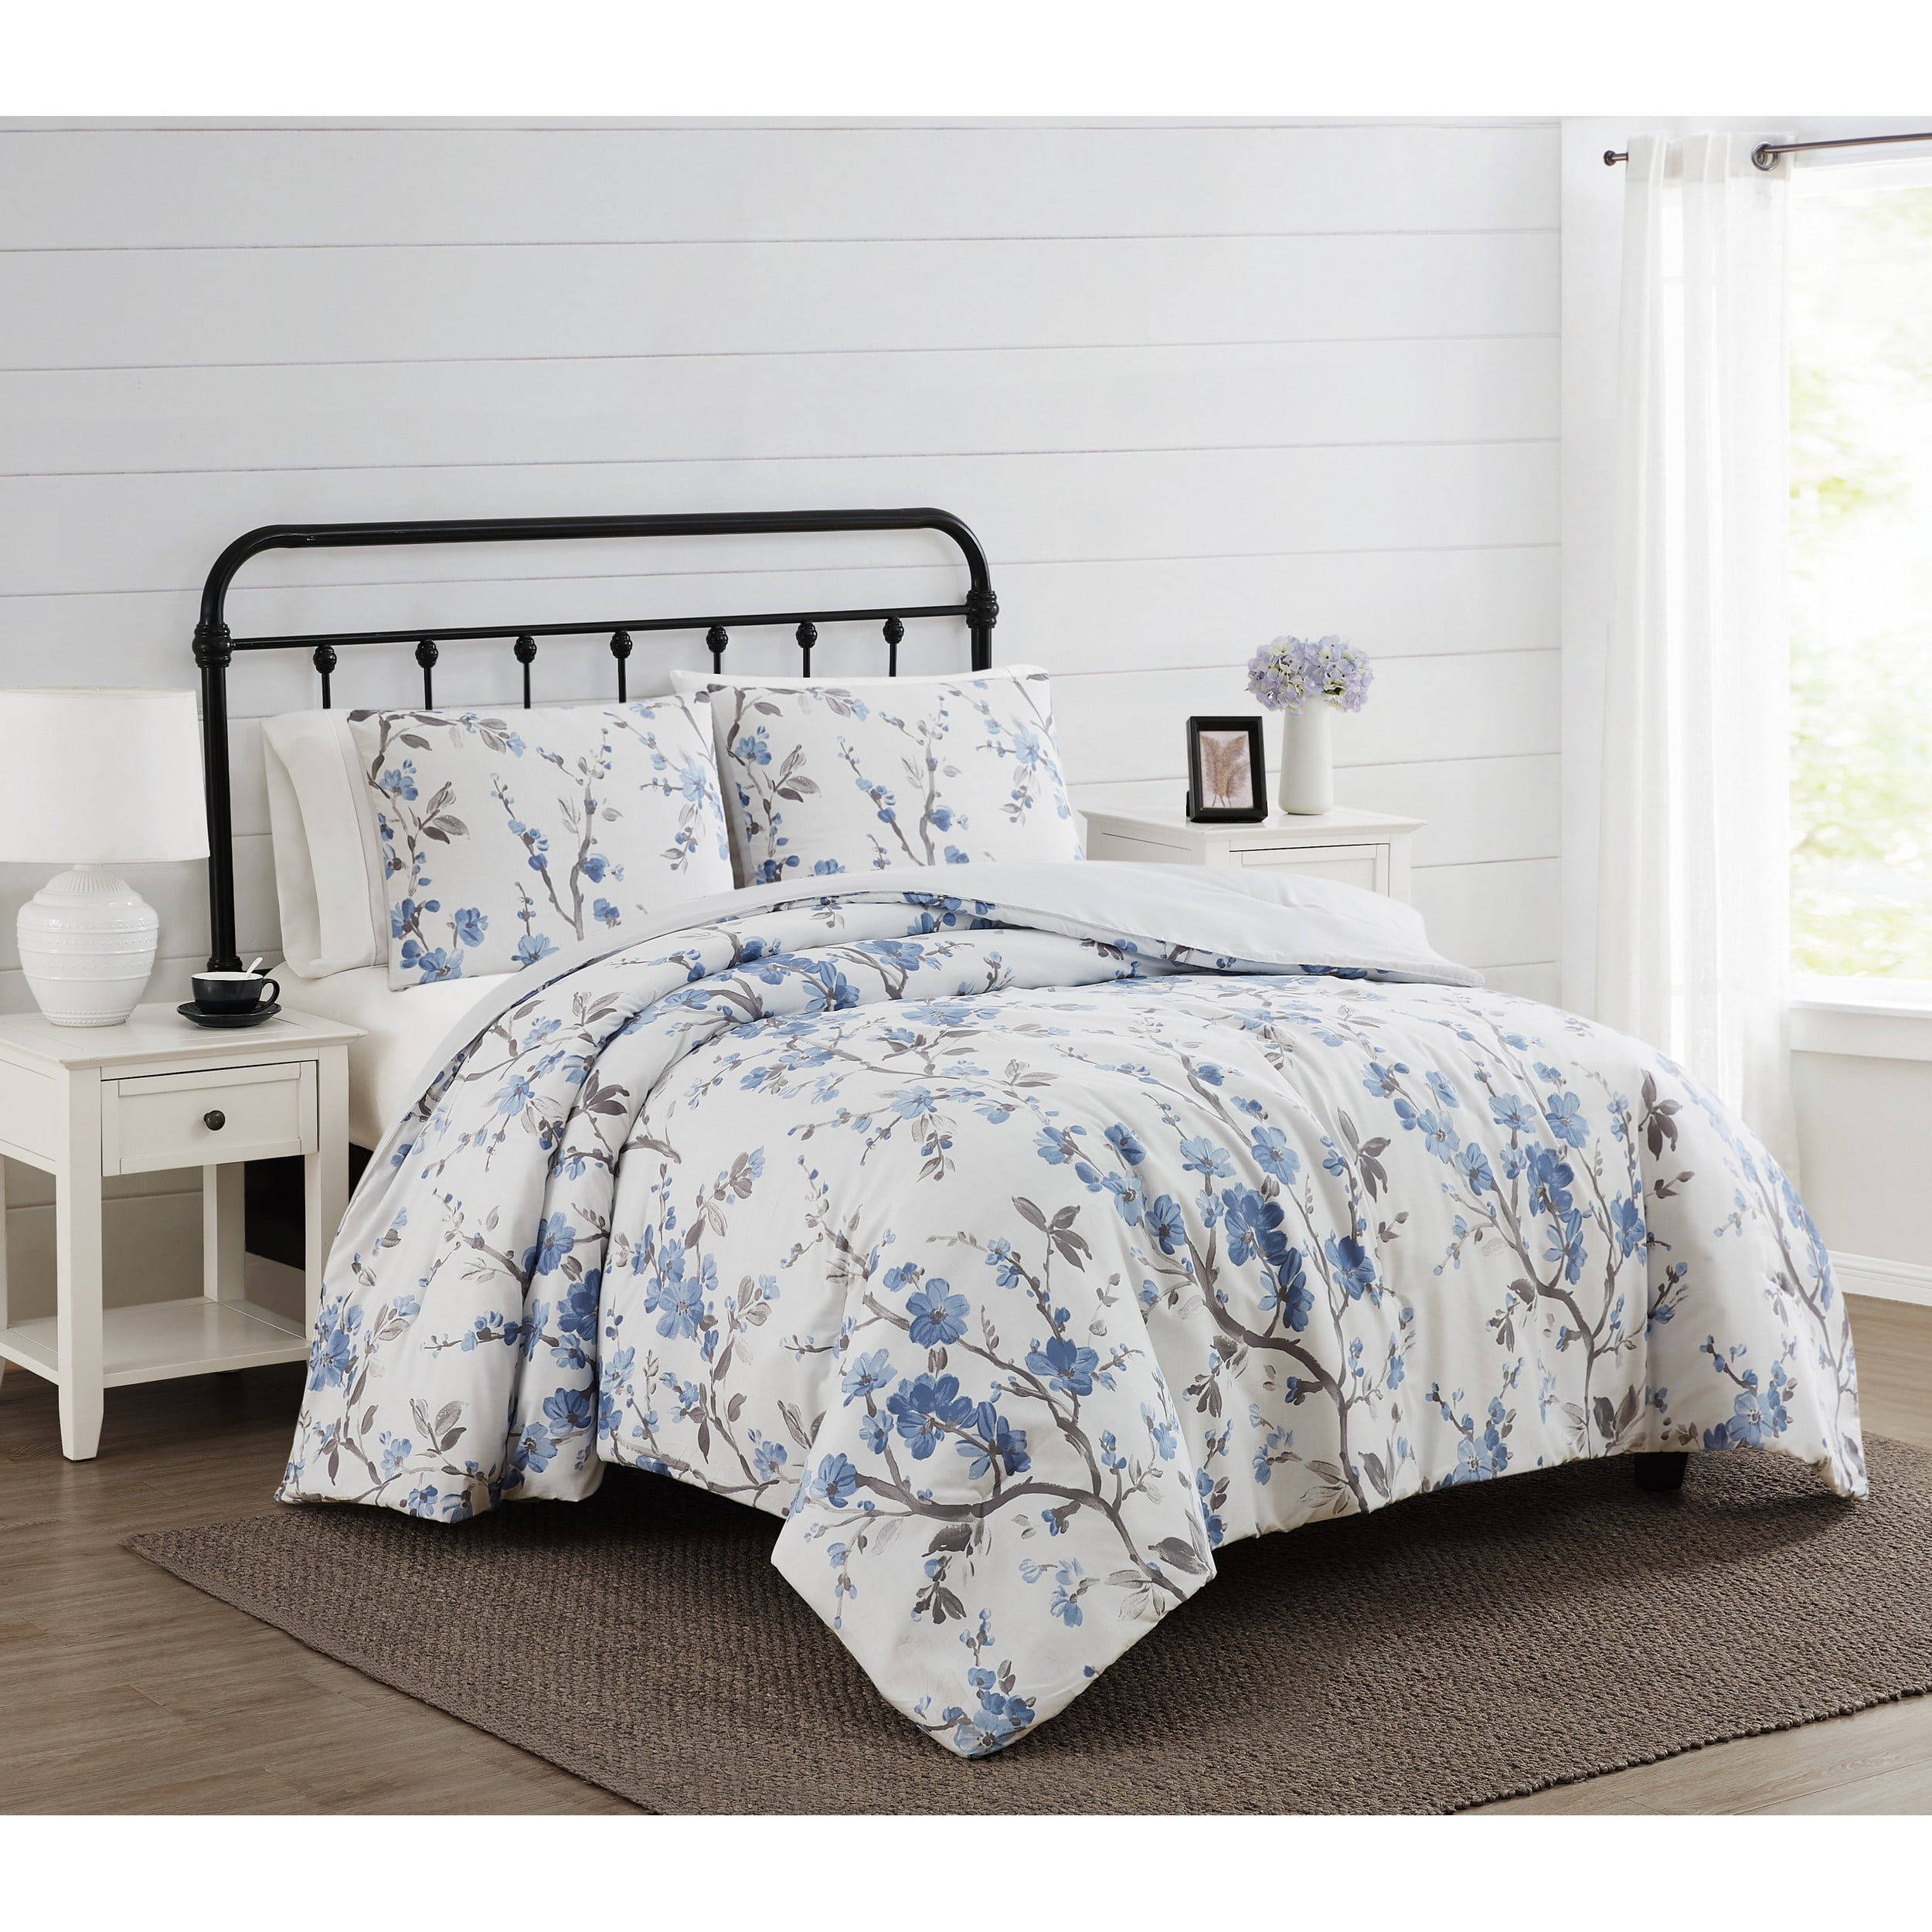 FLORAL COMFORTER SET Flowers Bedspread Bedding Pillowcase Navy Blue Twin XL